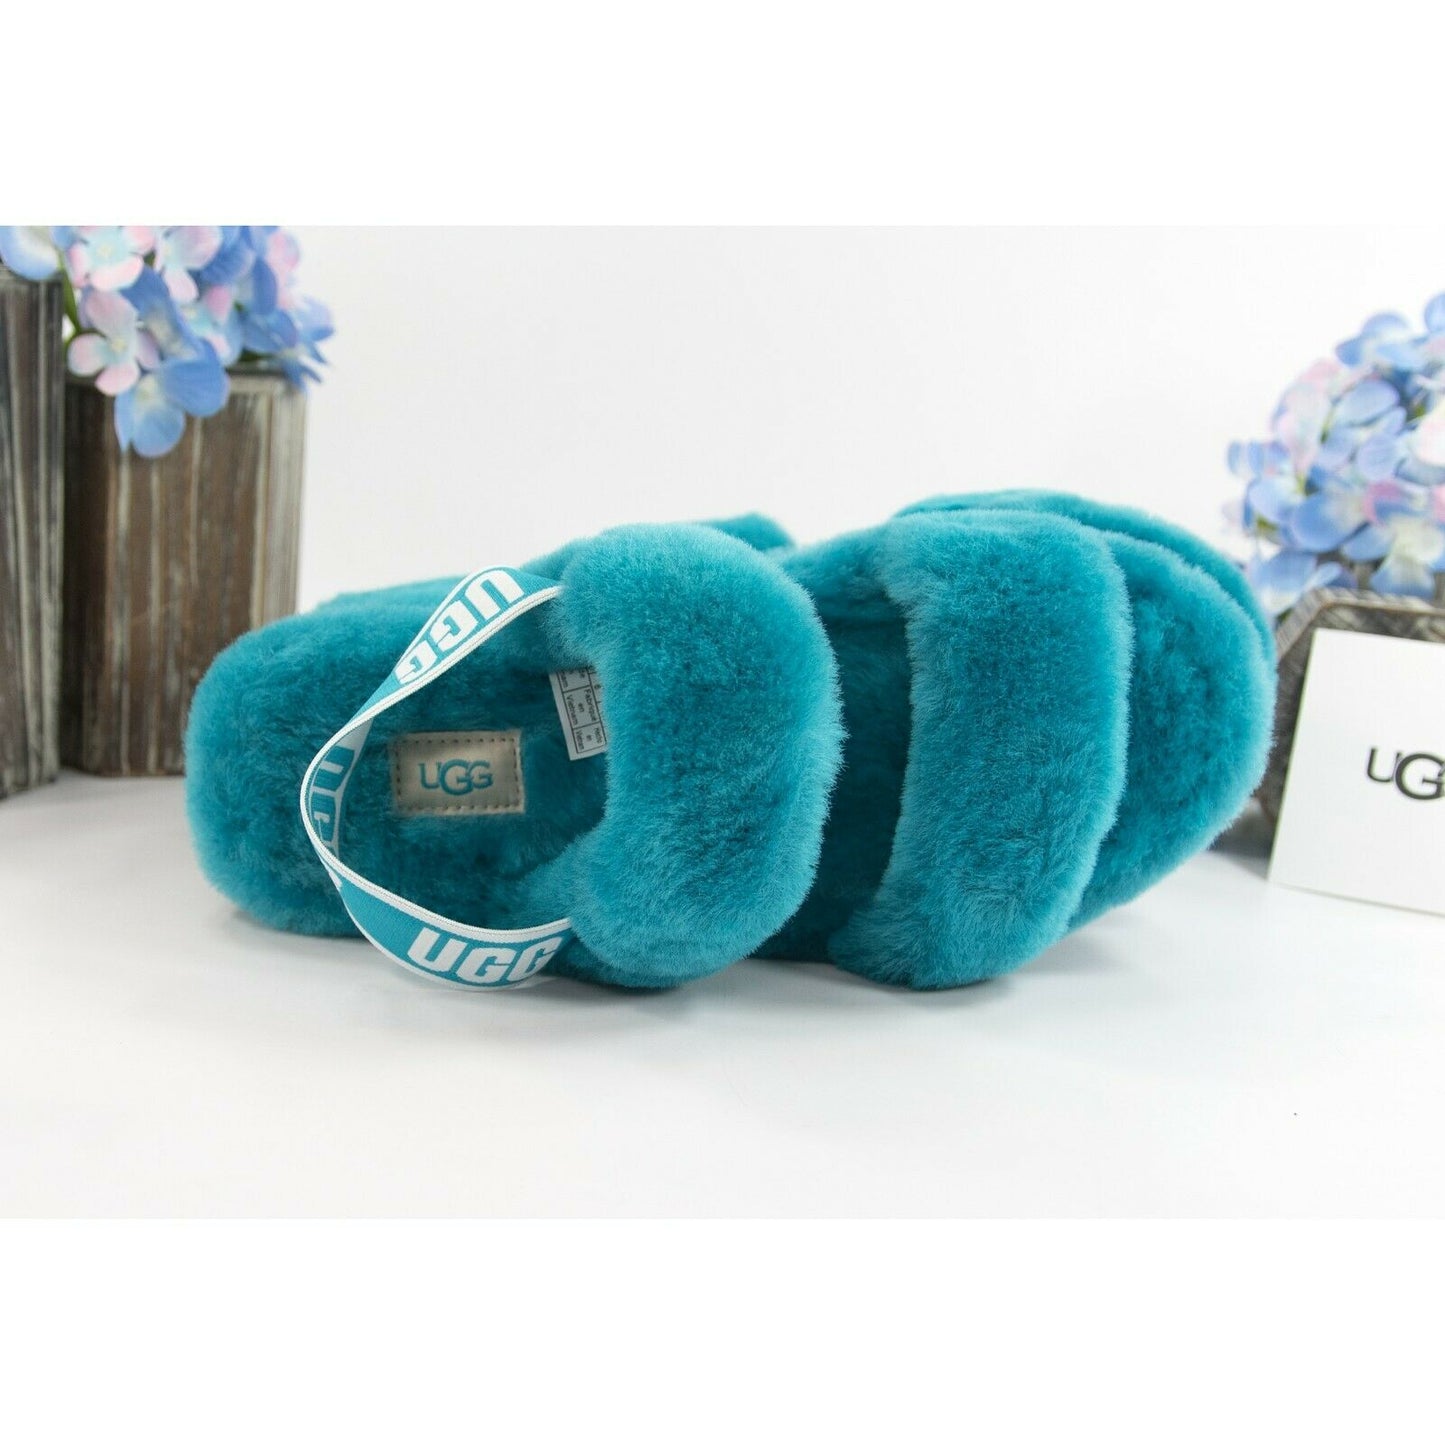 UGG Fluff Oh Yea Aqua Blue Sheepskin Fur Slippers Slides Sandals Sz 8 NIB